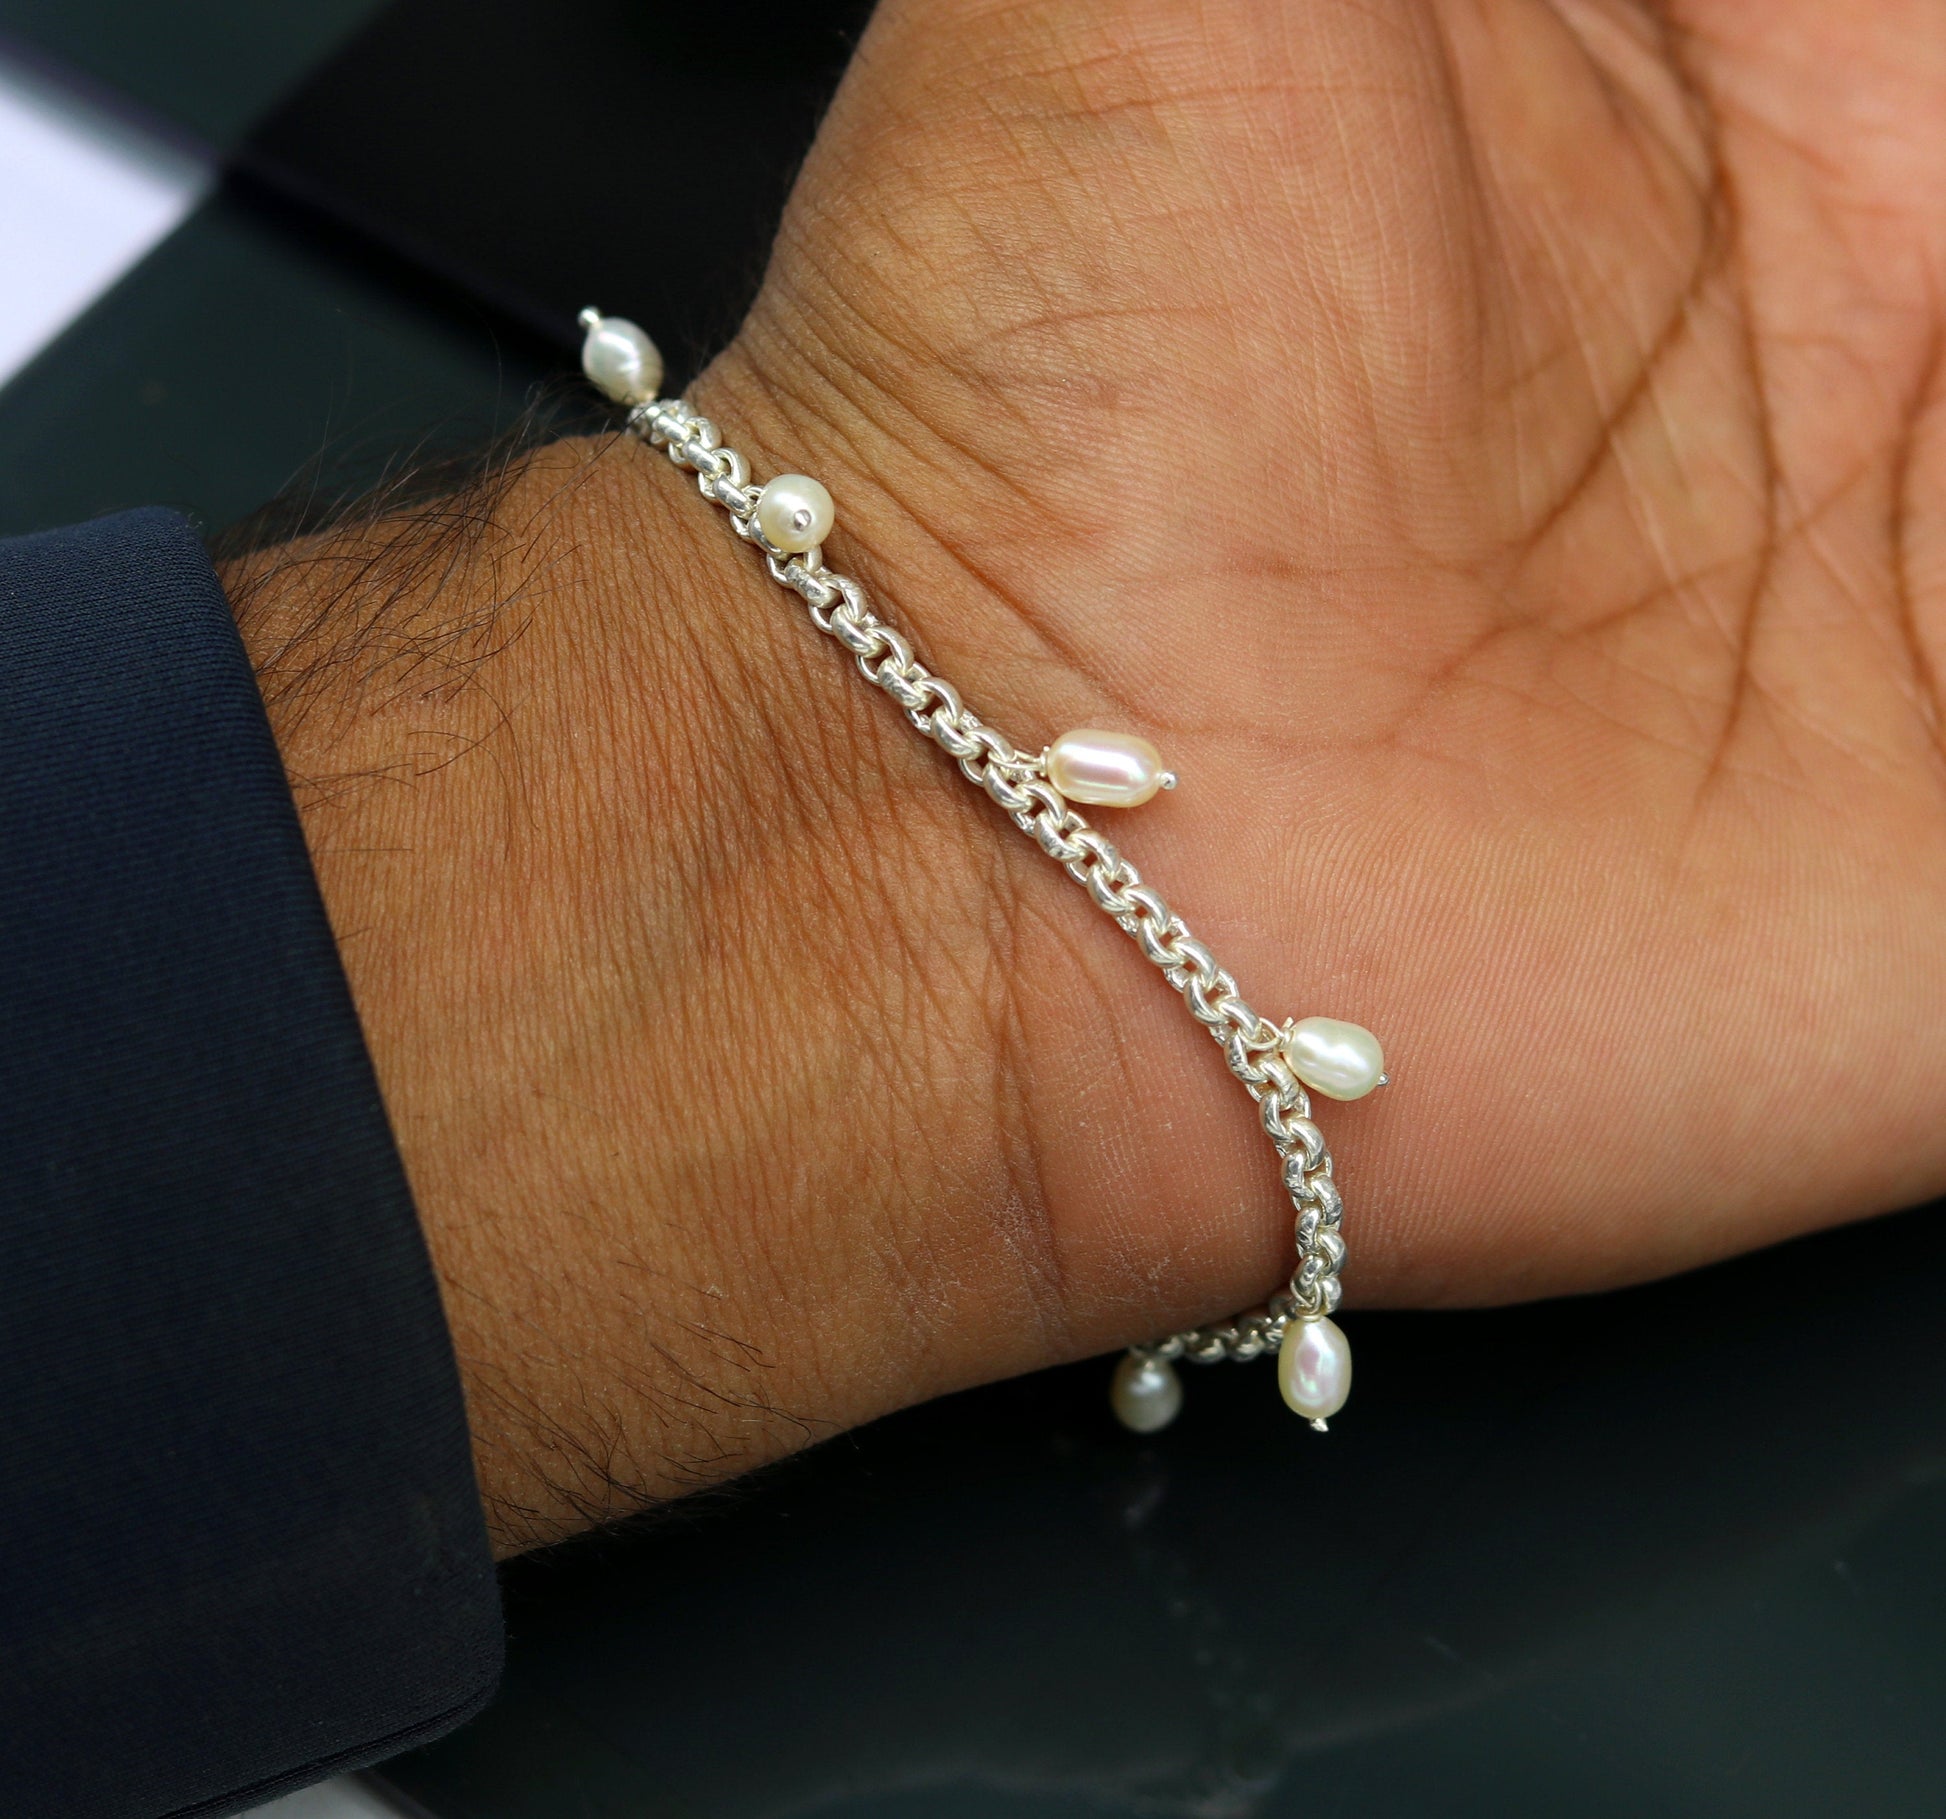 7.5" 925 sterling silver handmade customized charm bracelet, stylish pearl bracelet unisex gifting jewelry belly dance jewelry nsbr191 - TRIBAL ORNAMENTS